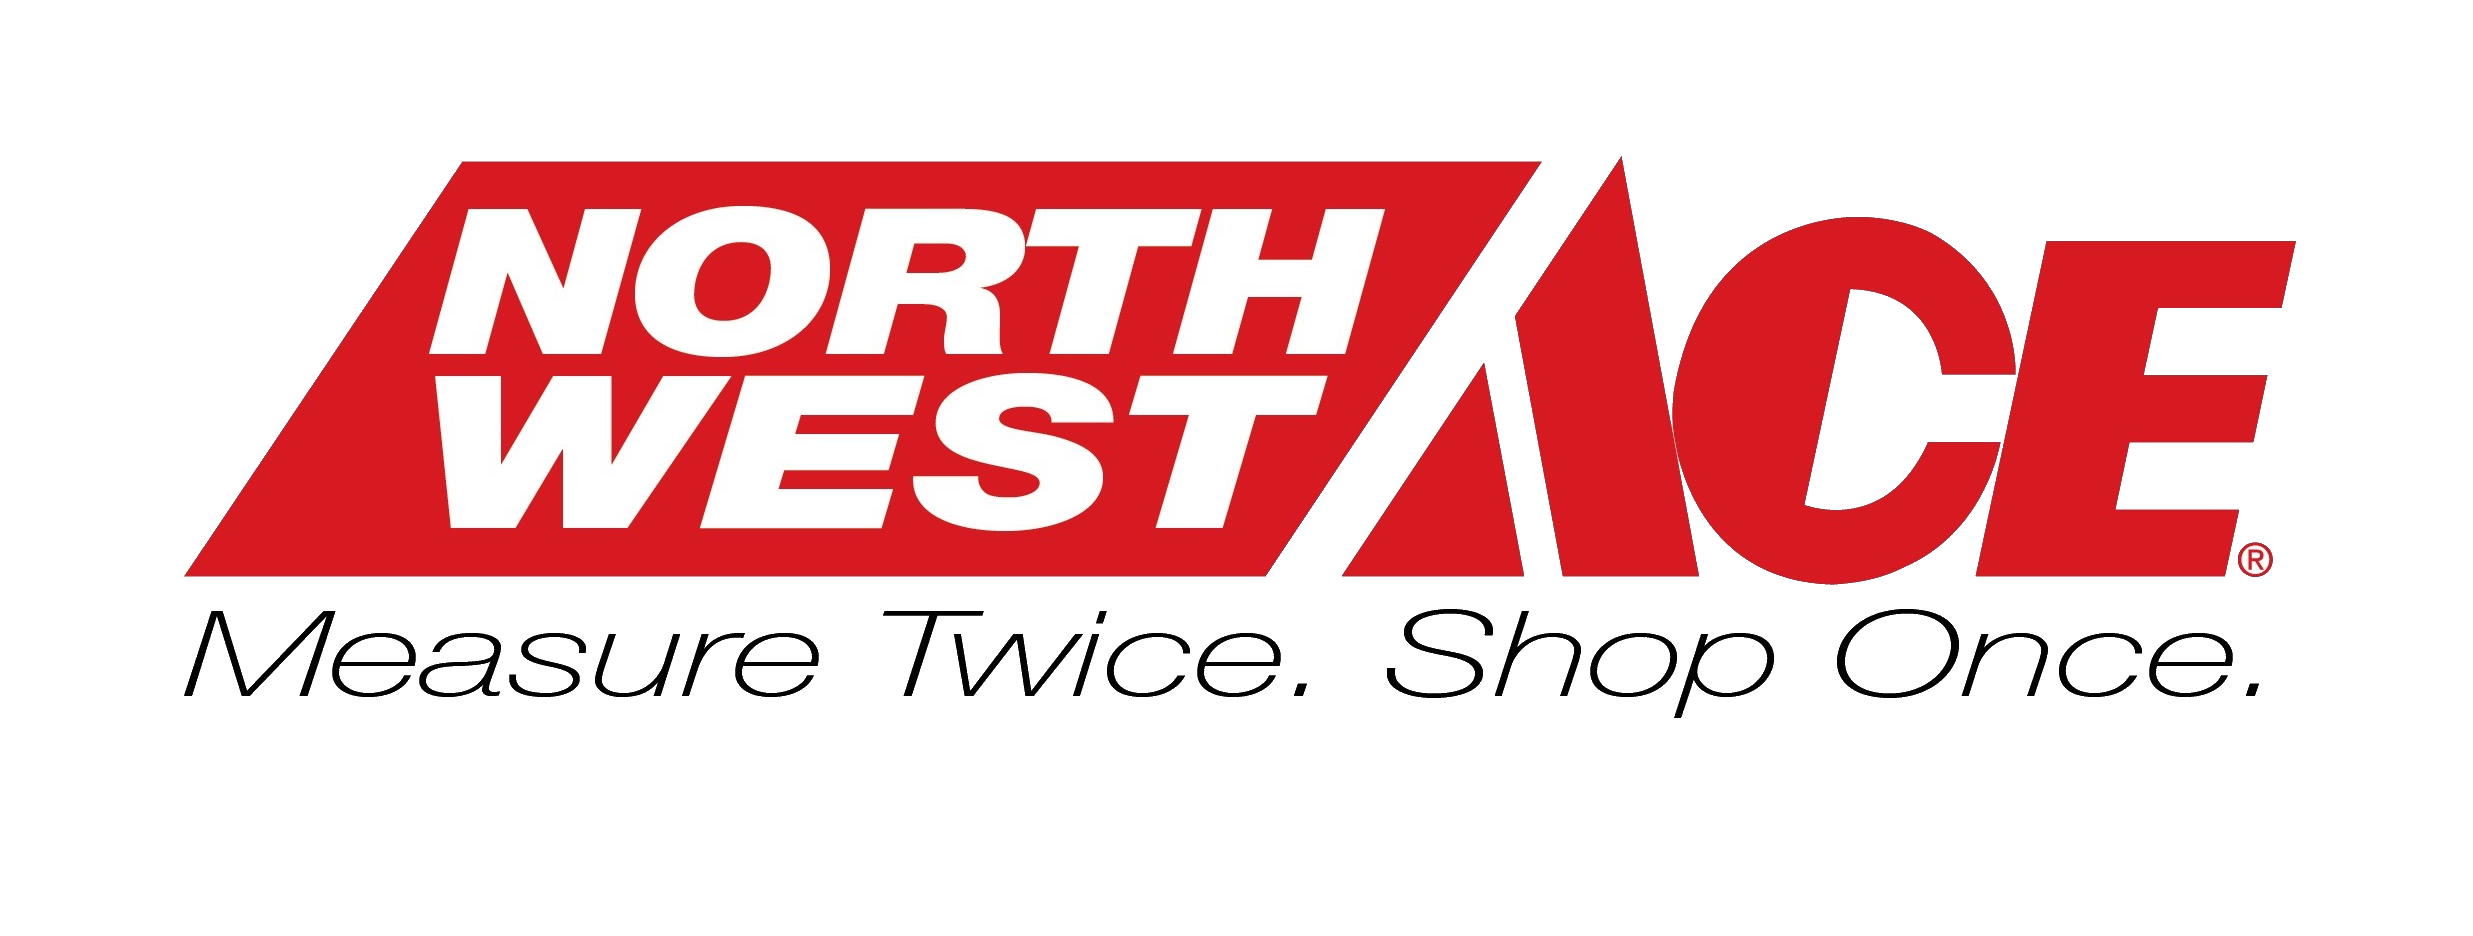 NorthwestAce Logo.png